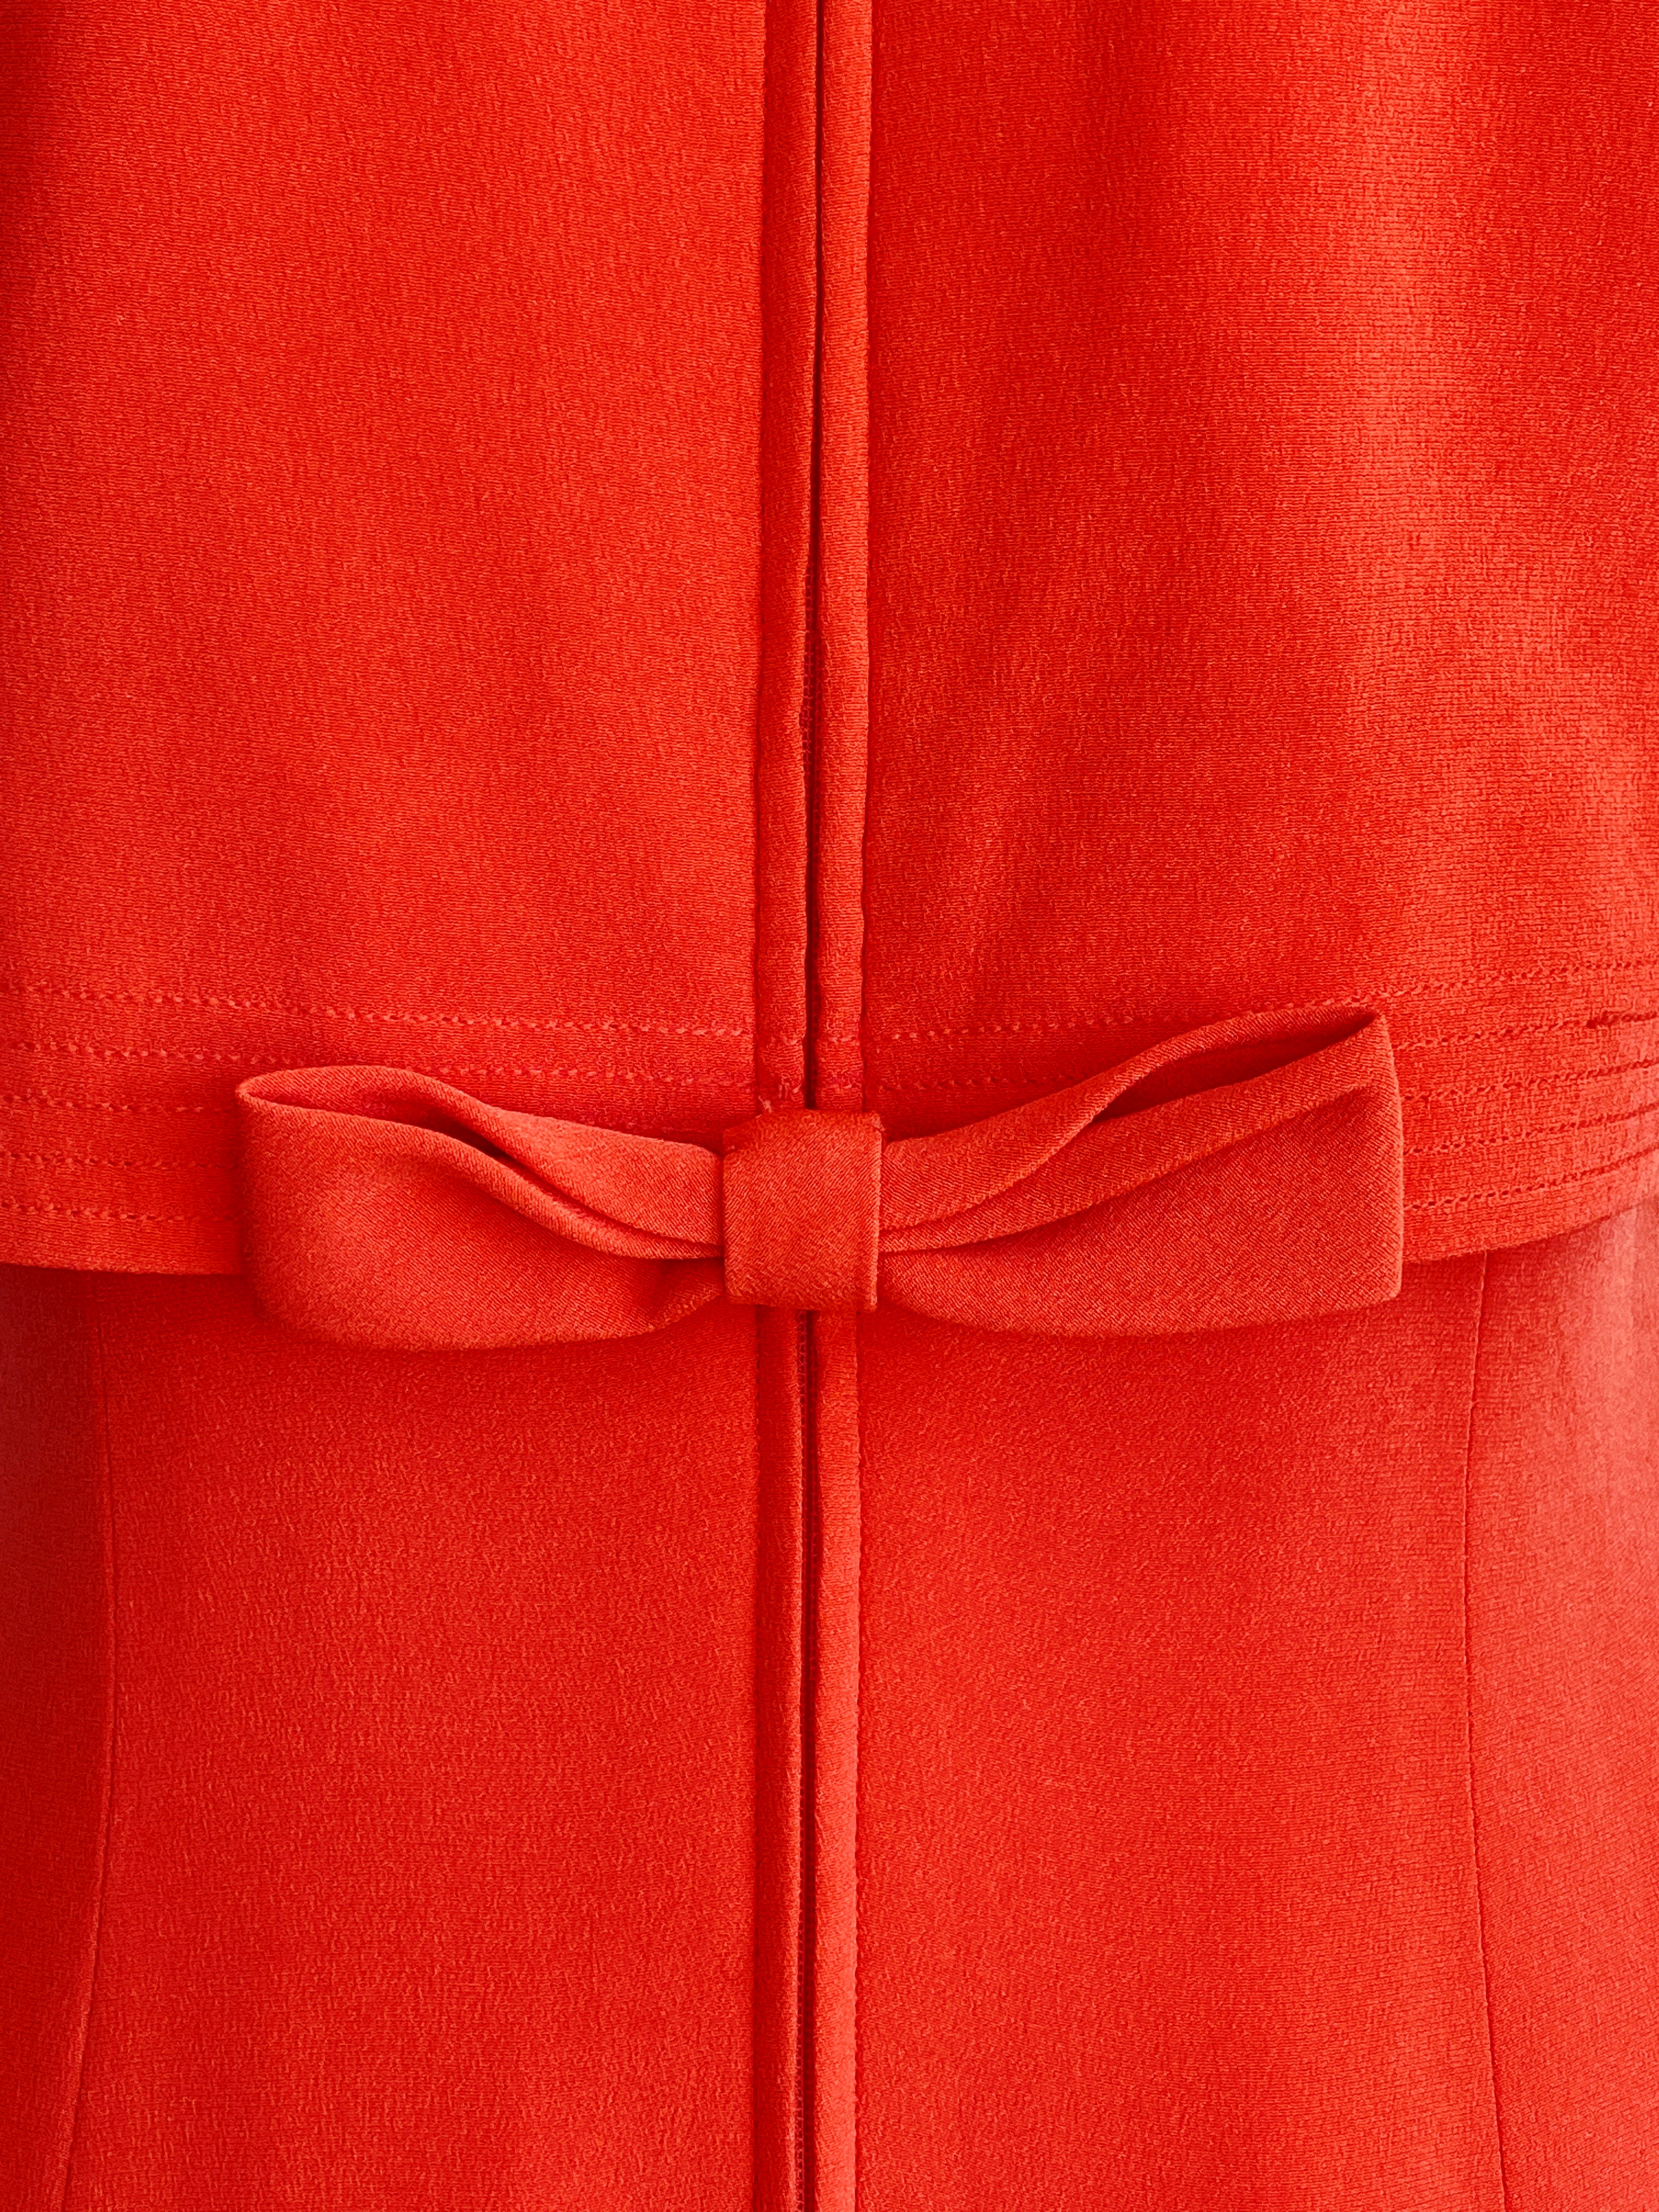 Maggie of London Orange Short Sleeve Dress, 6